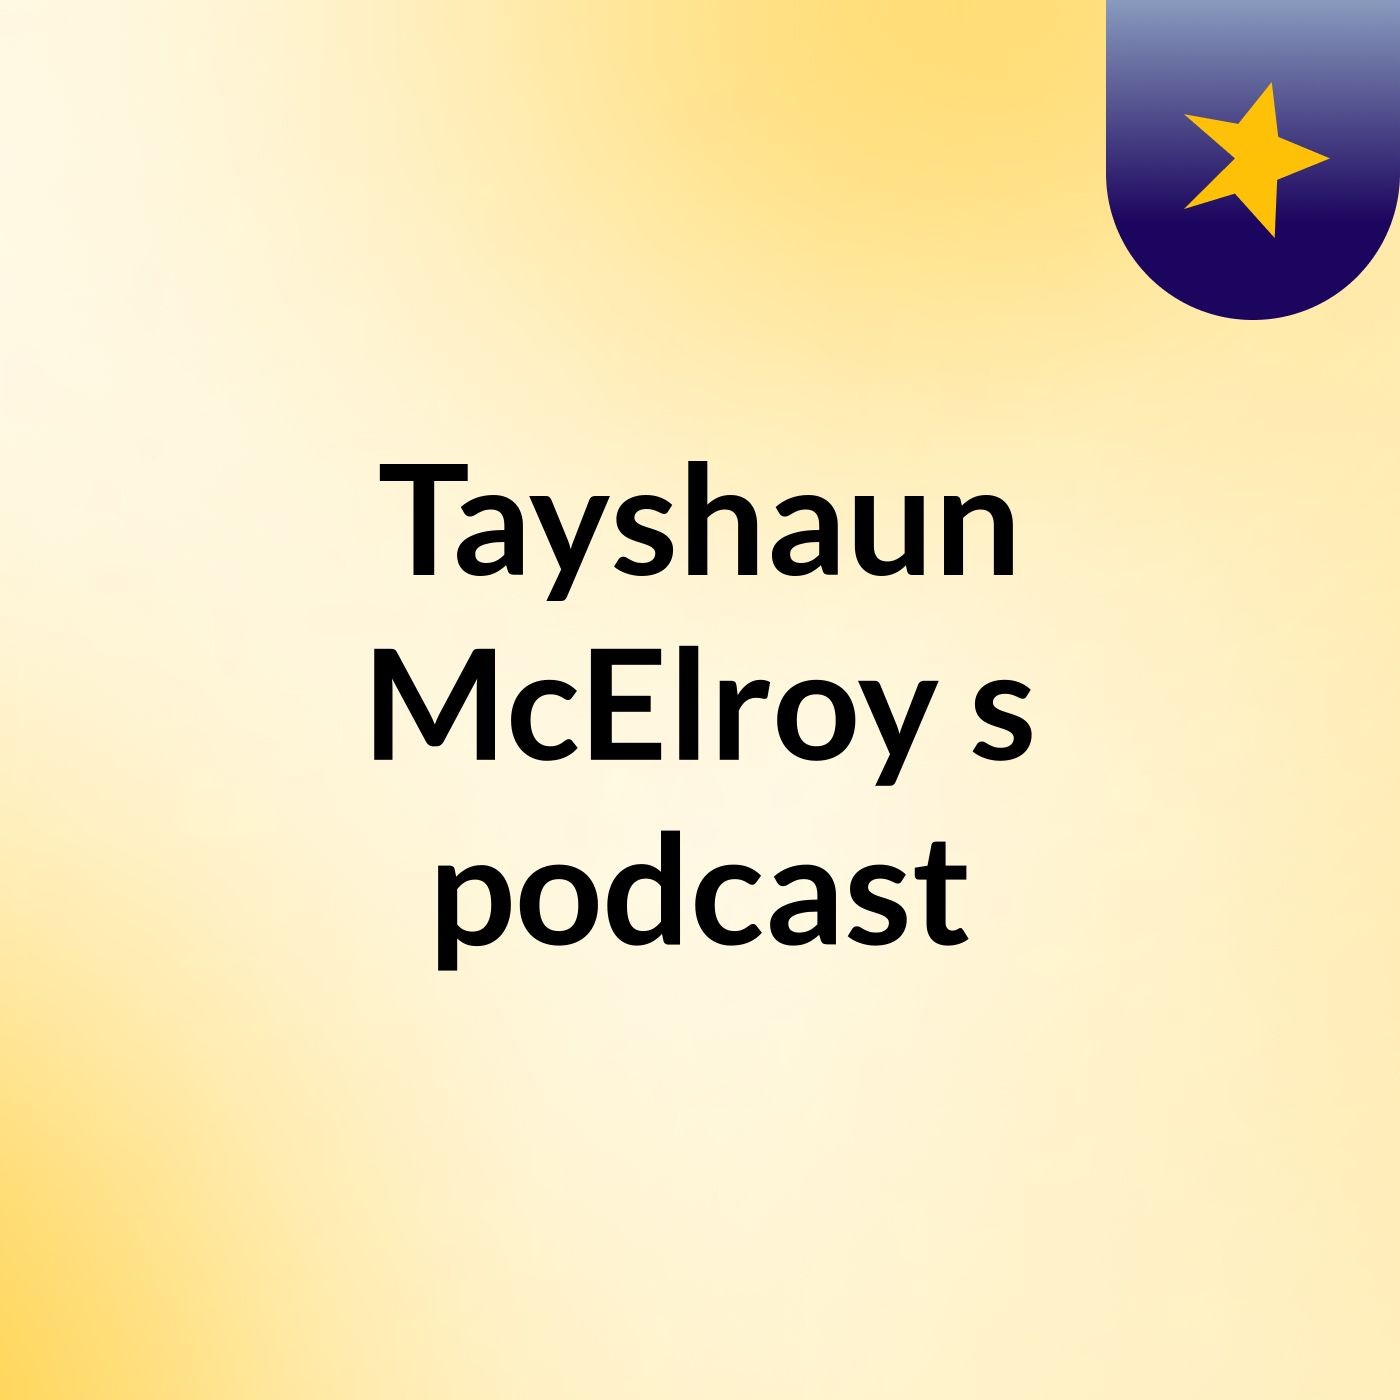 Tayshaun McElroy's podcast